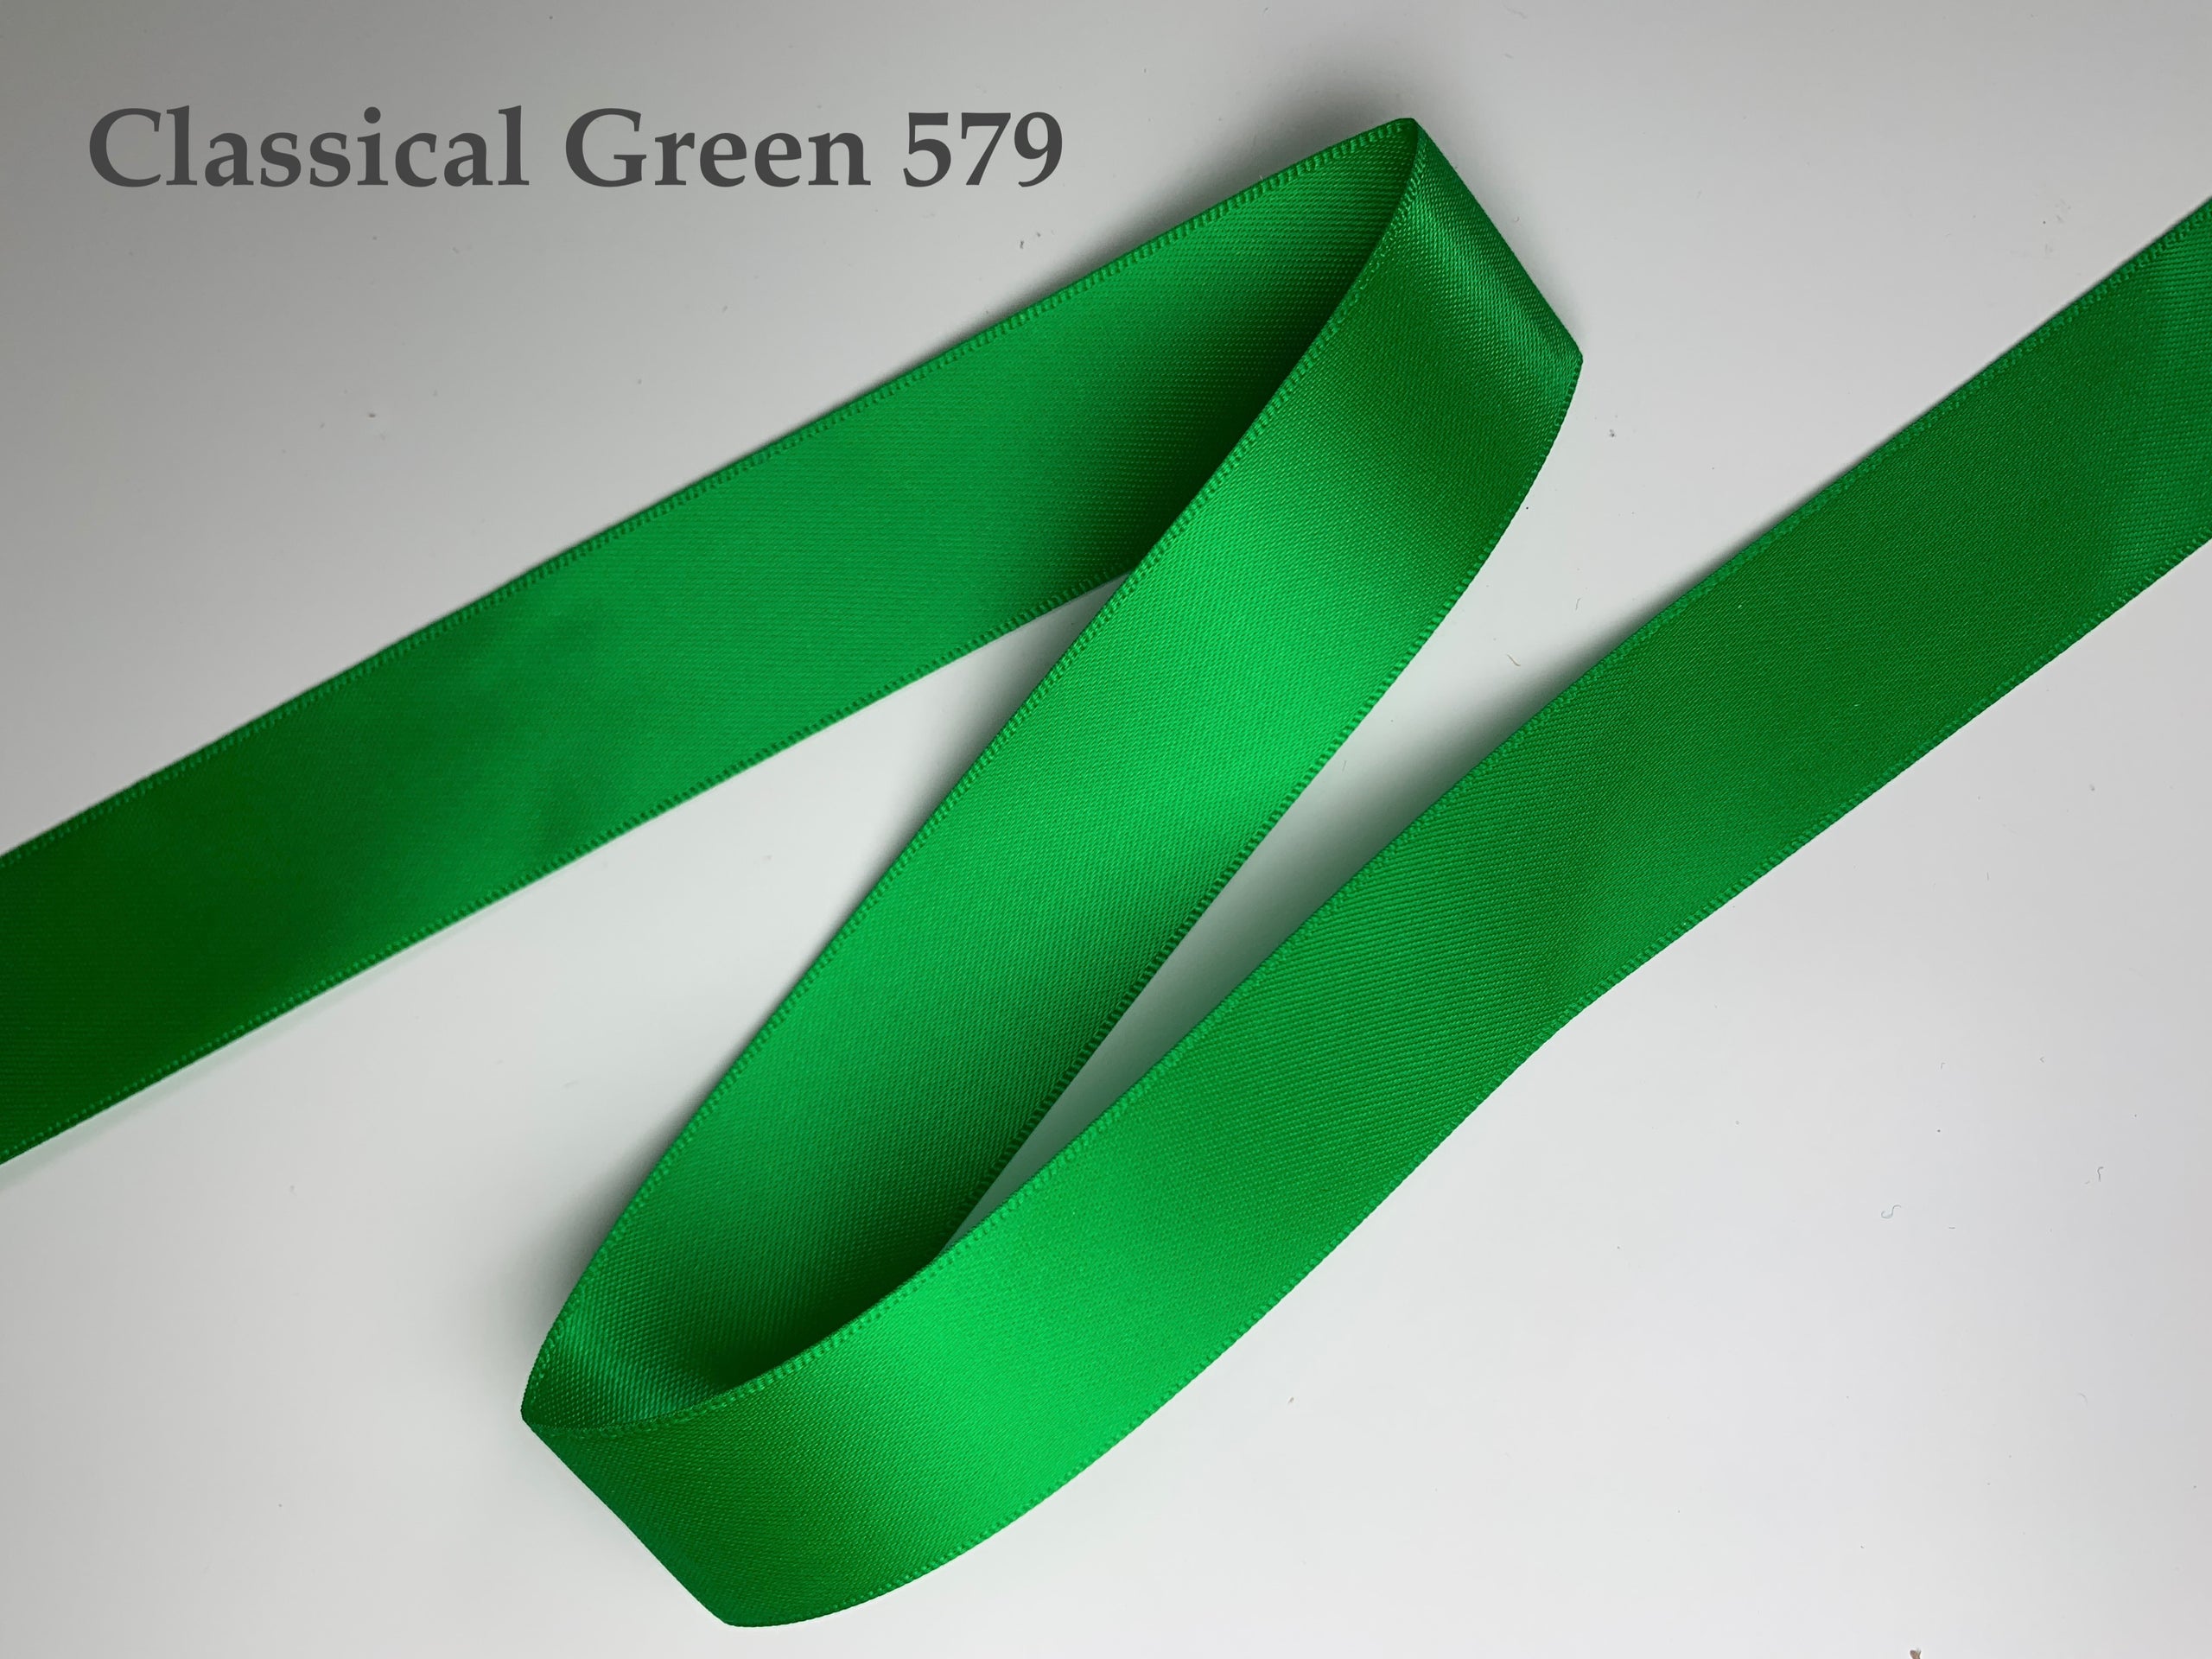 Dark Shale Green Premium Double Faced Satin Ribbon, 1-1/2x50 yards